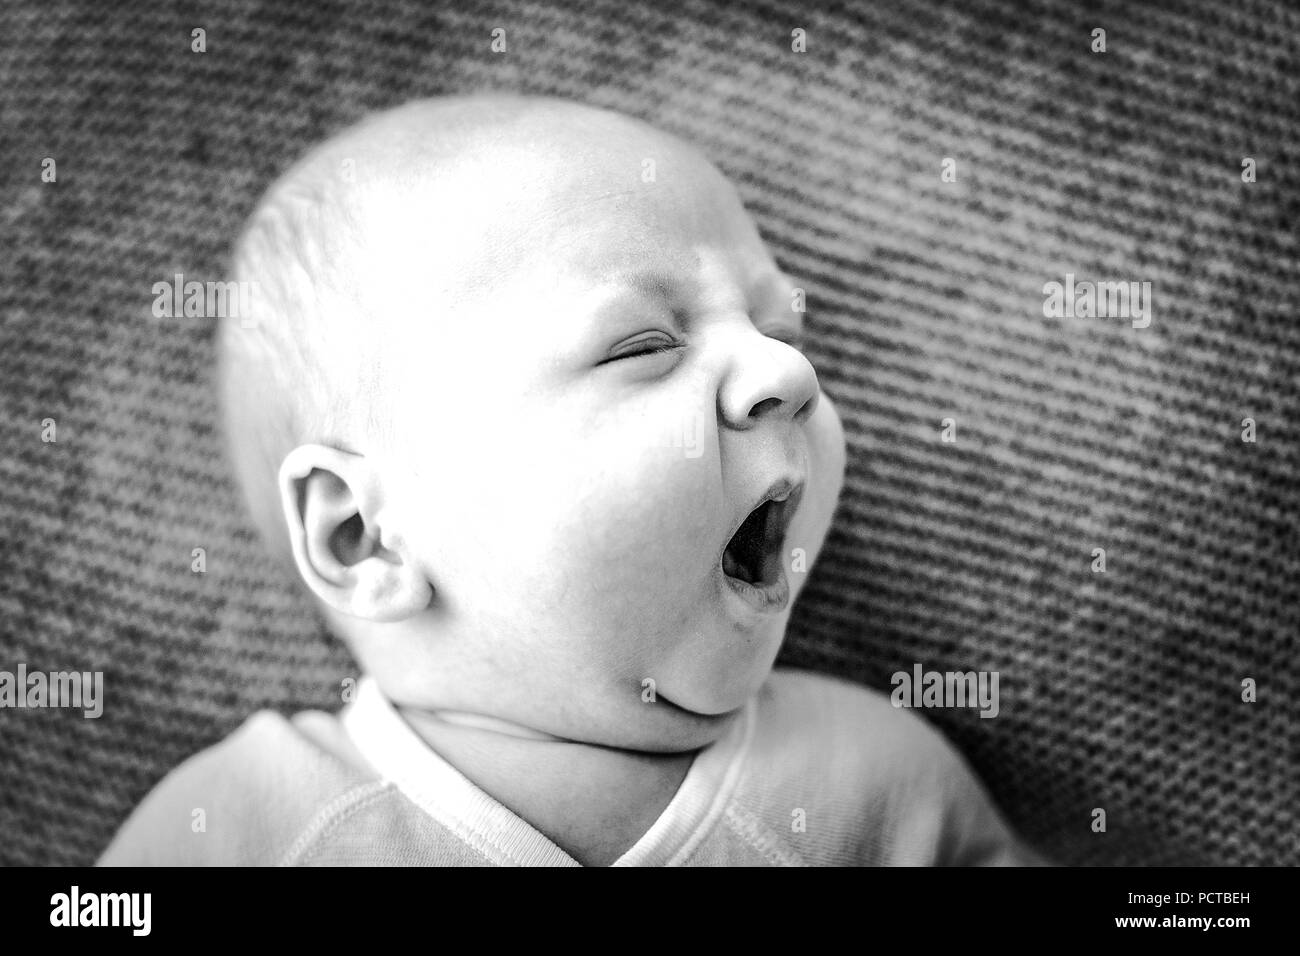 Baby, boy, 6 months, yawning, black and white shot Stock Photo